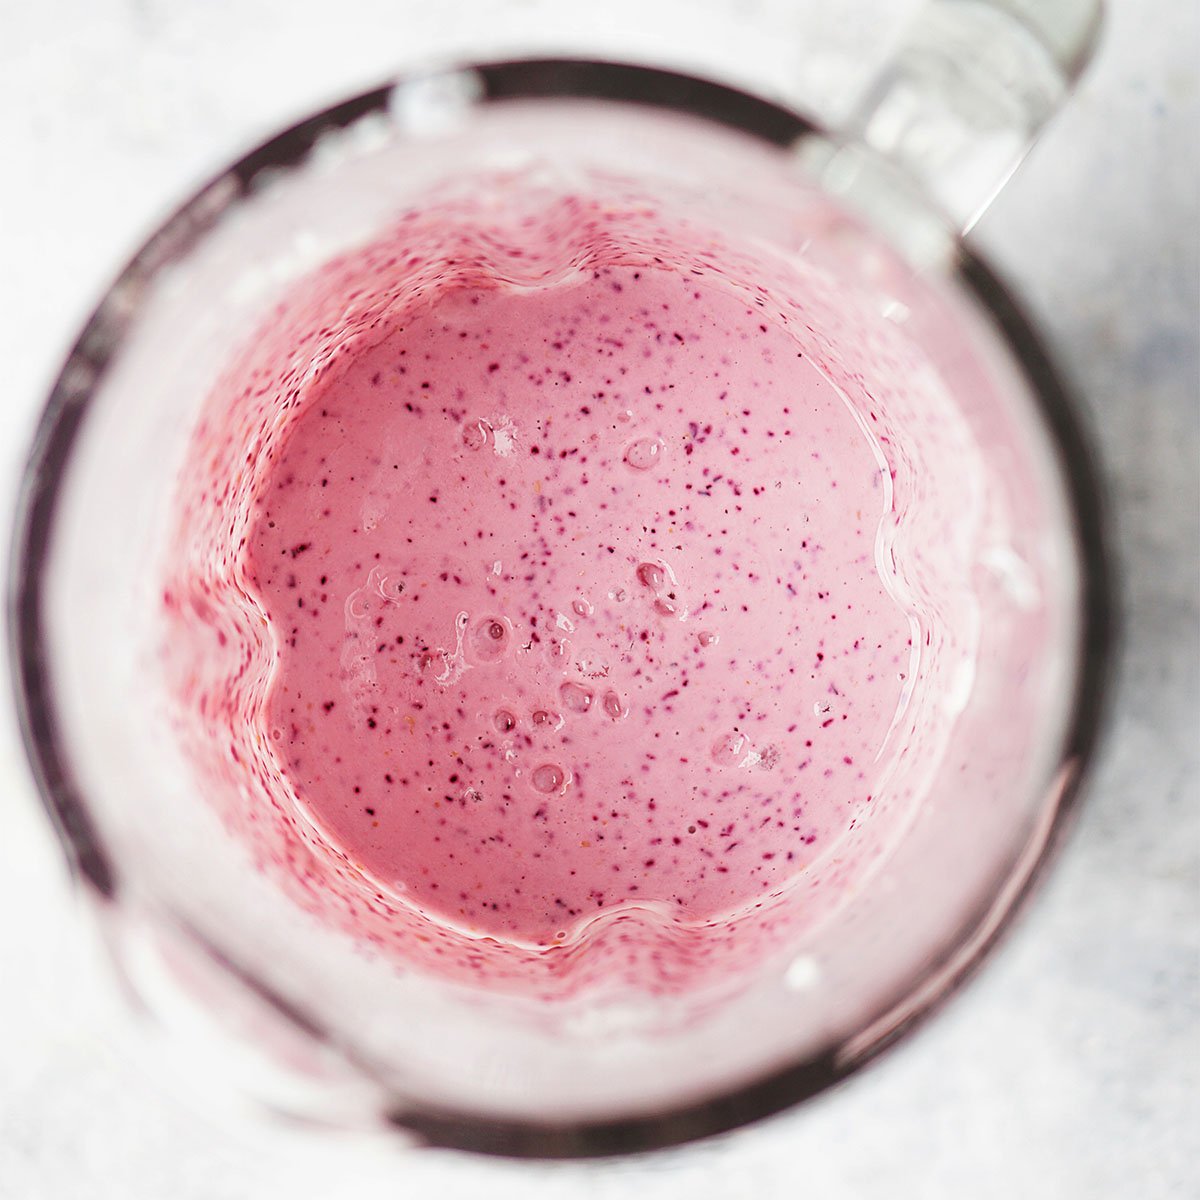 Mixed berry yogurt in a blender.